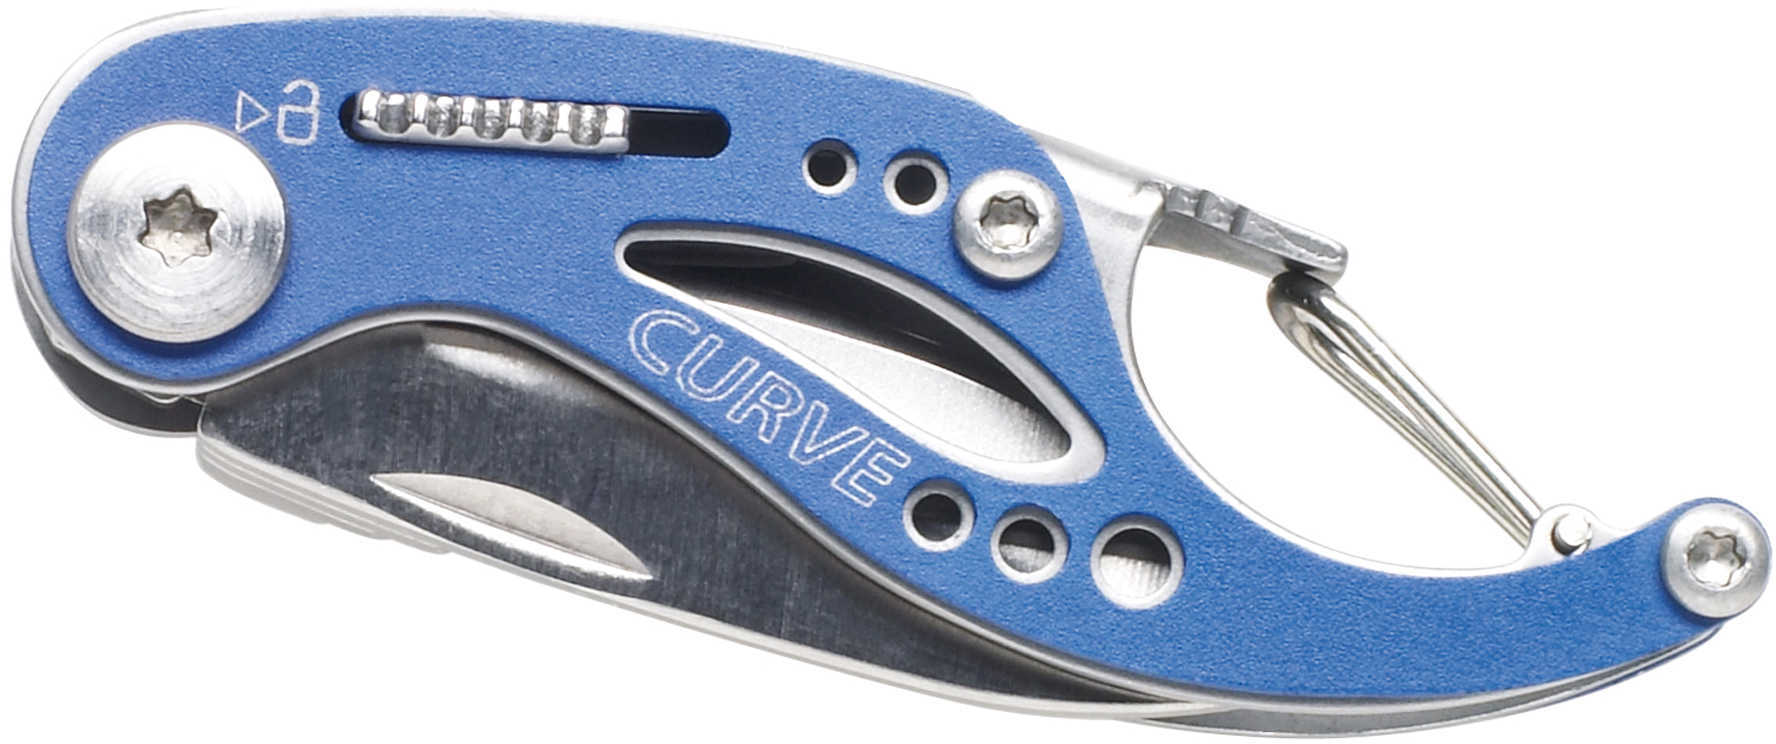 Gerber Blades Curve Multi Tool/ Clam Pack Blue 31-000116